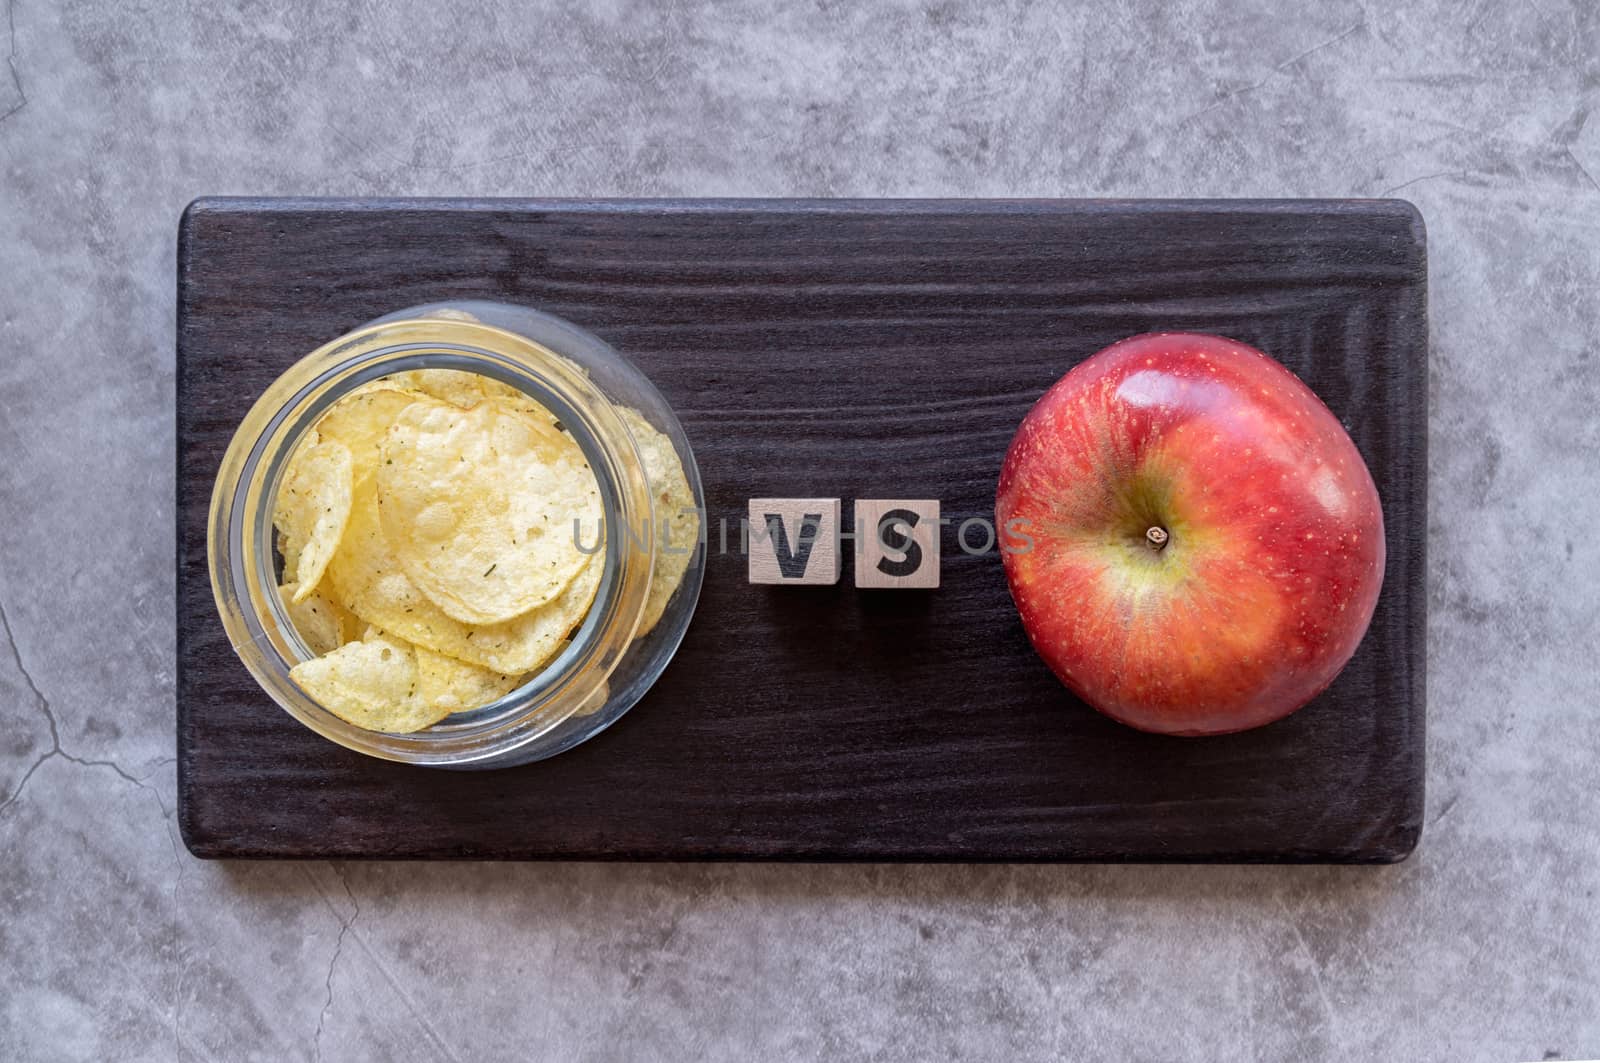 chips versus apple top view on dark background by Desperada